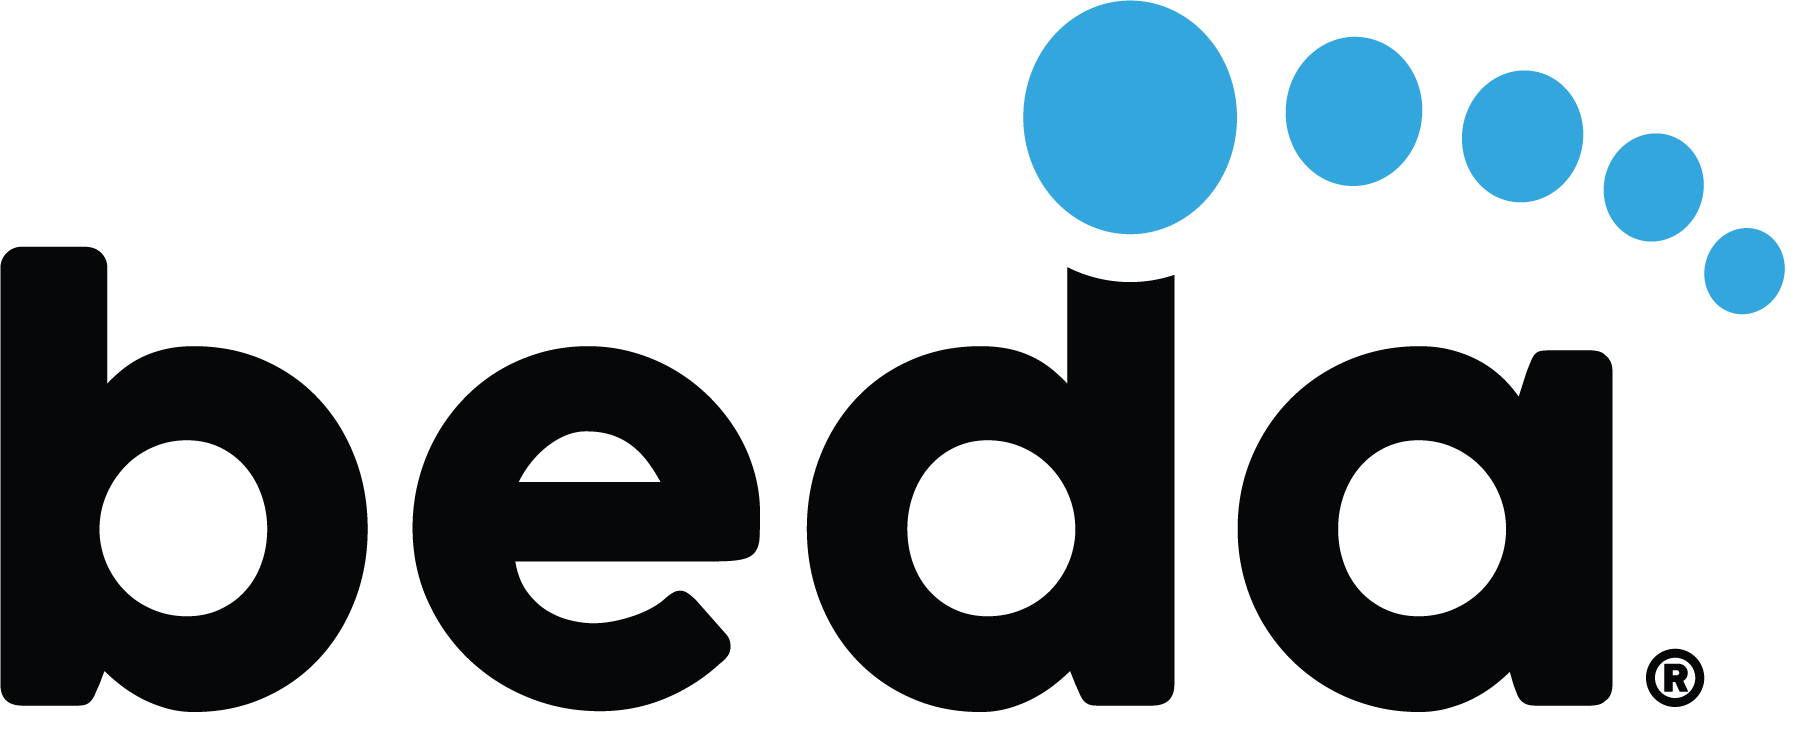 Logo Beda